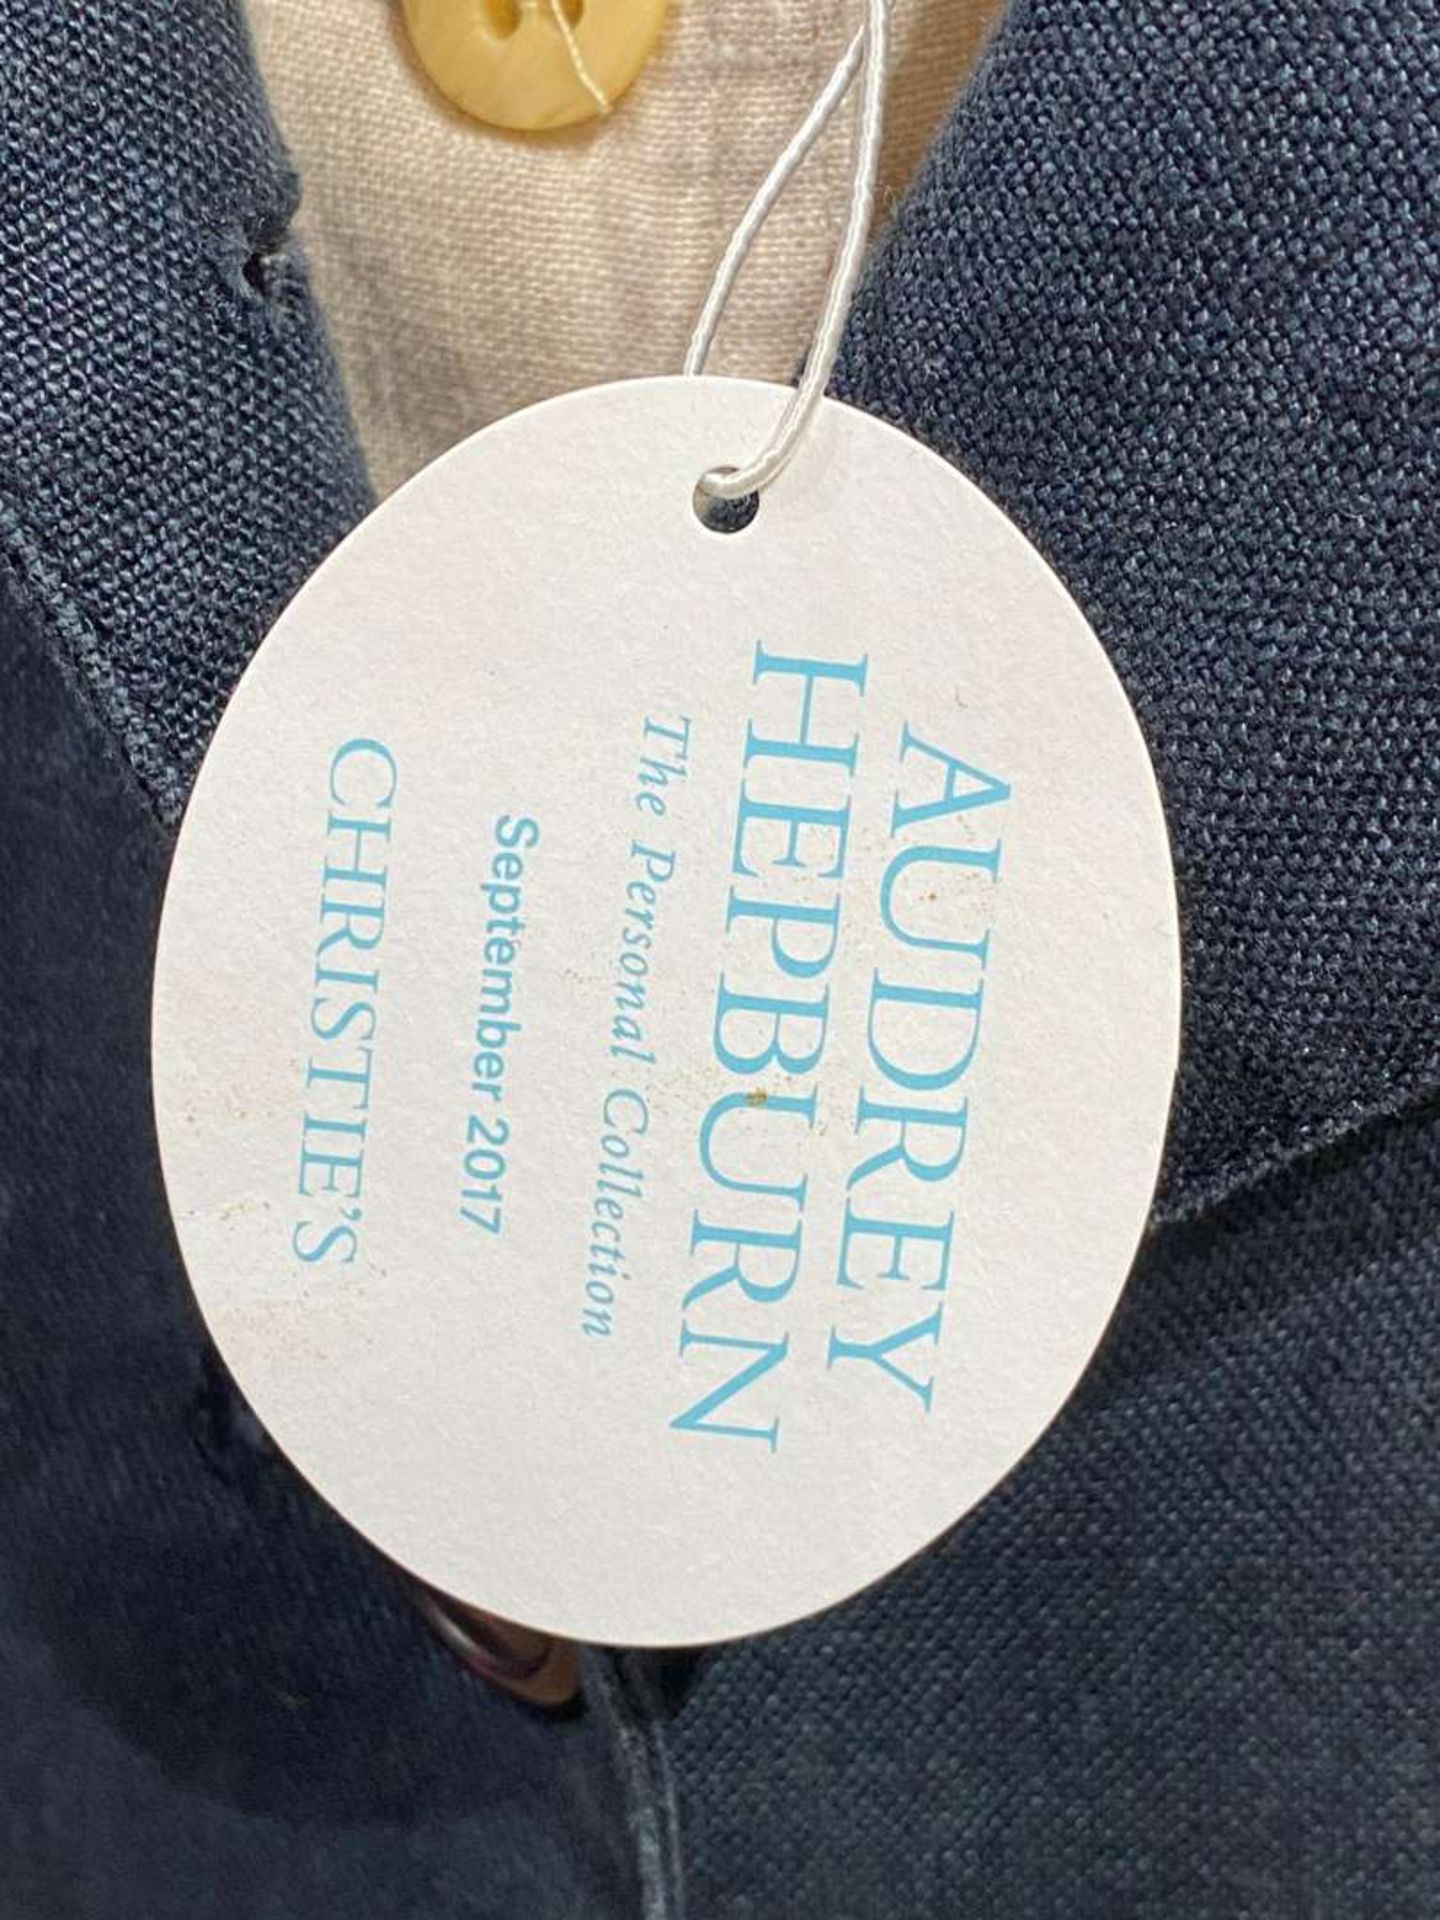 AUDREY HEPBURN, Armani Jeans, Ex Christies, September, 2017 - Image 5 of 22